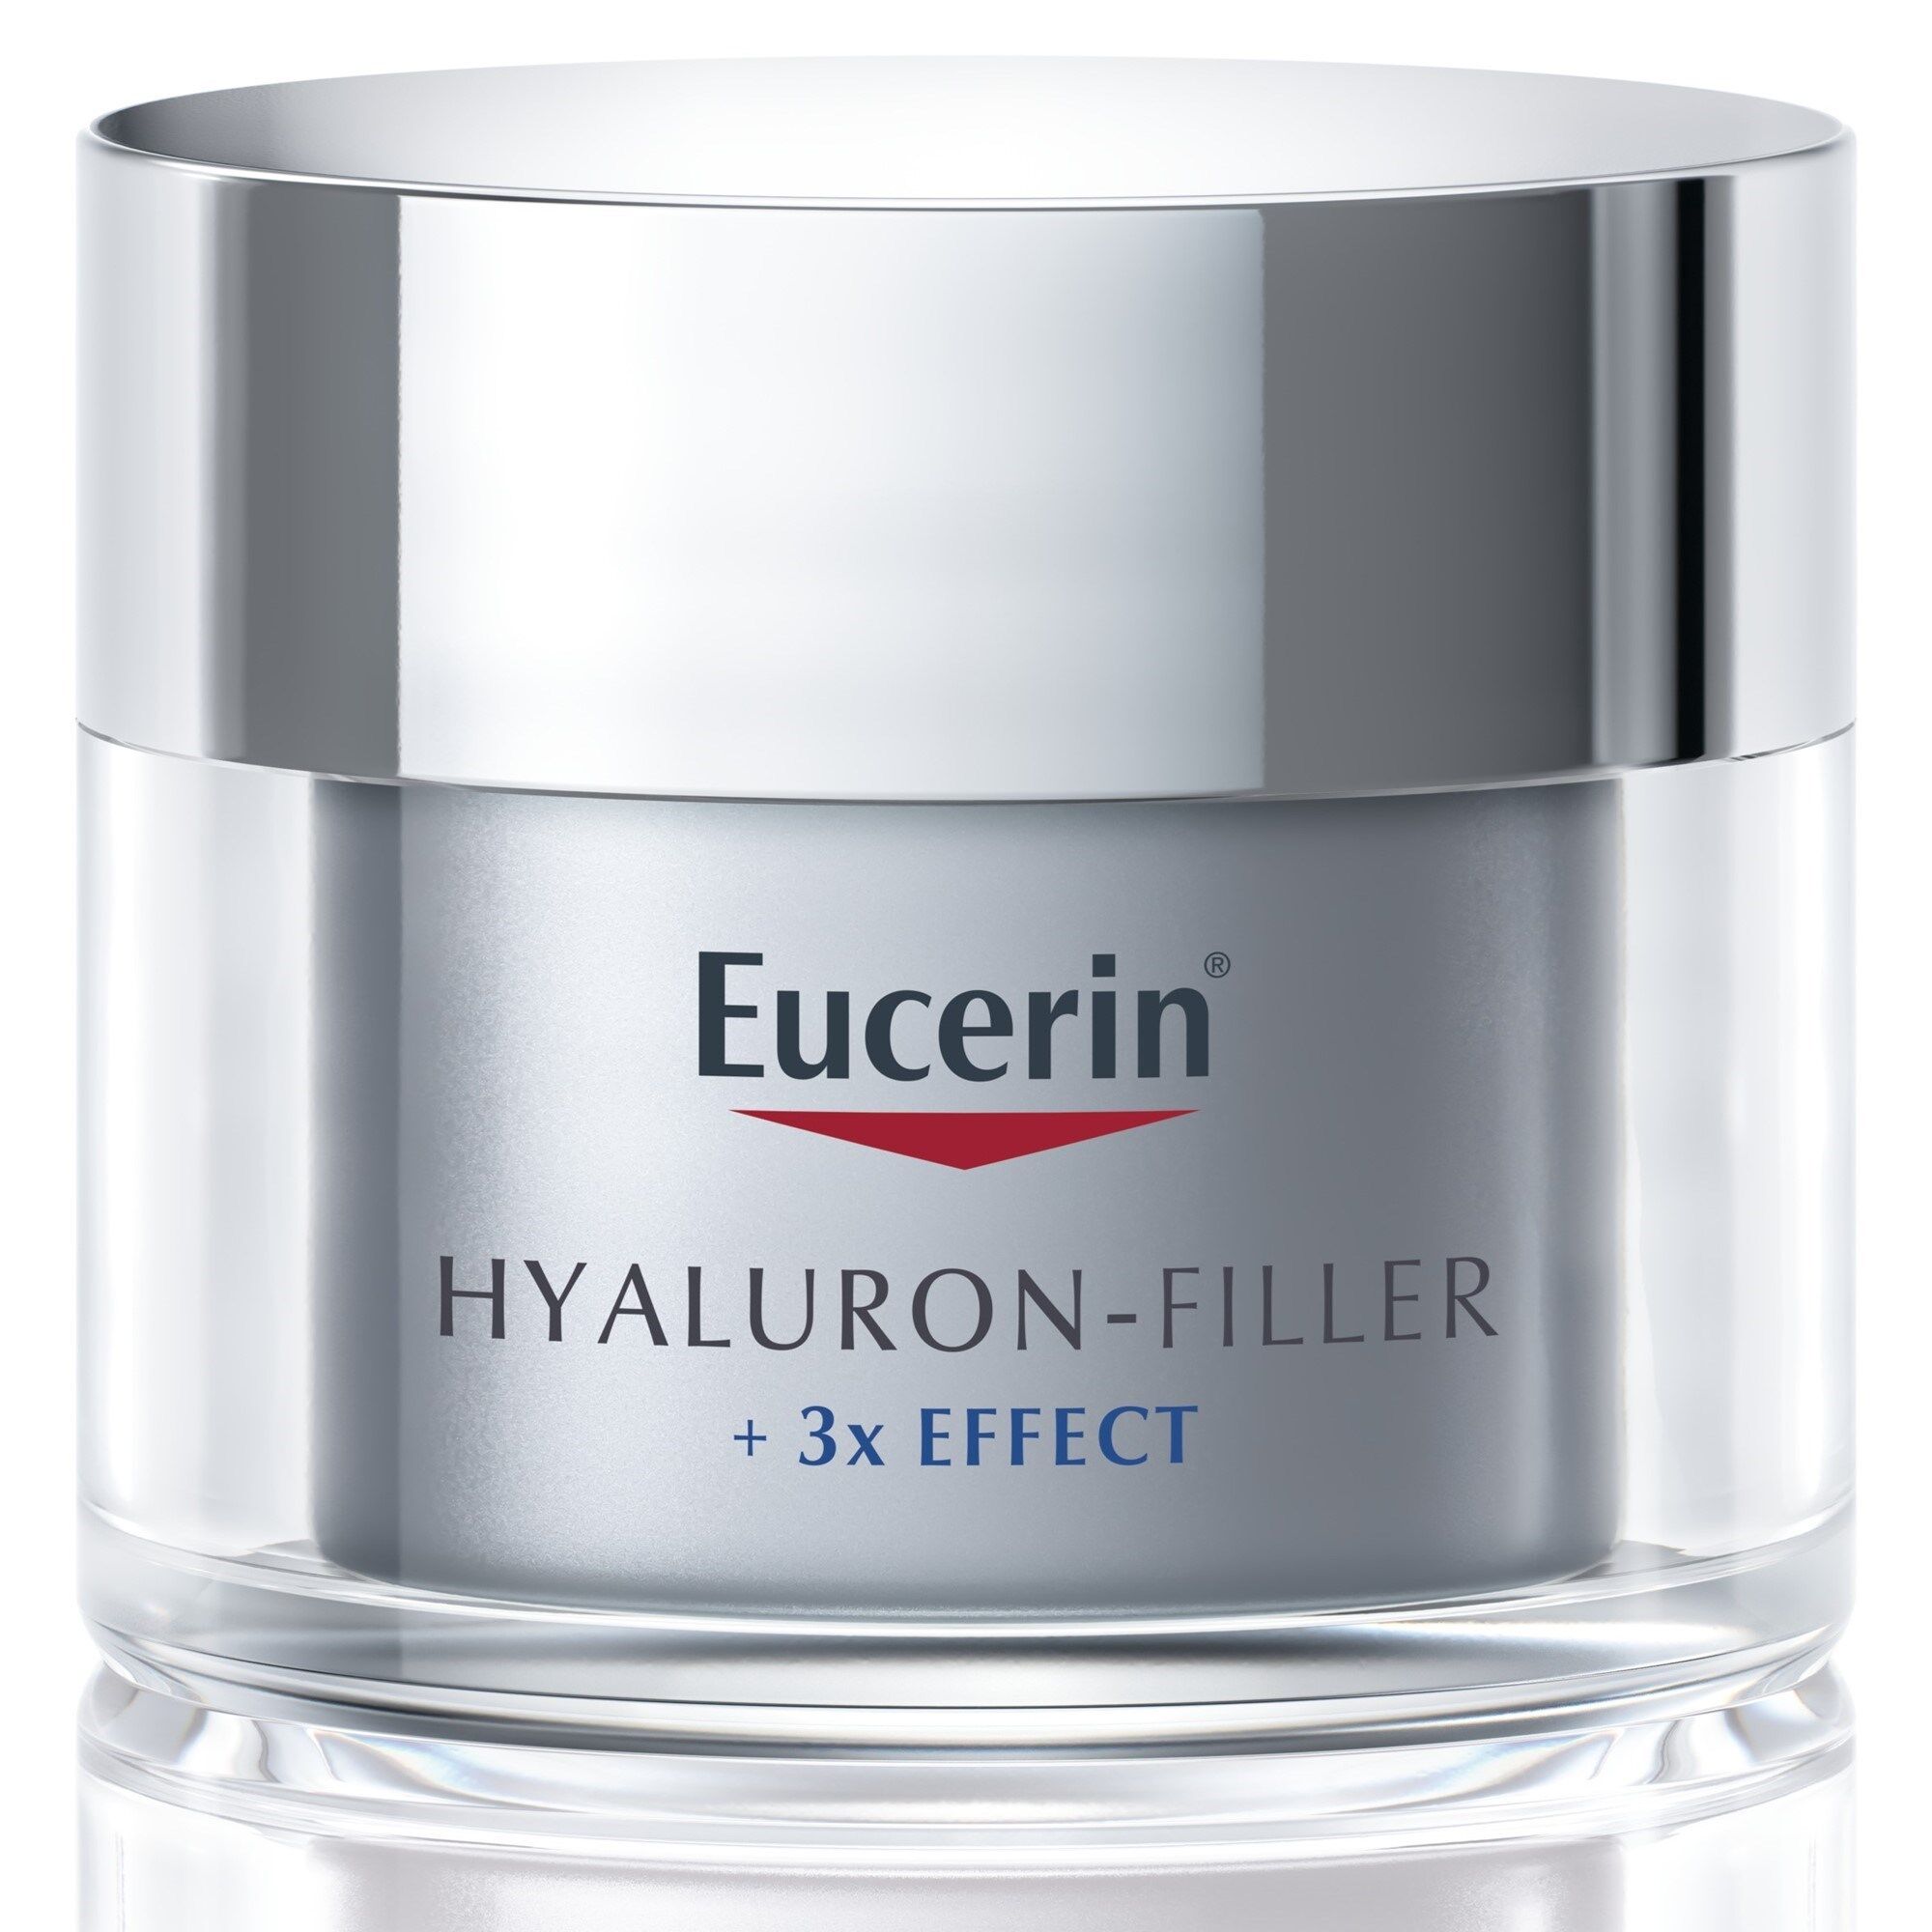 Eucerin Hyaluron-Filler 3x Effect Crema de noche rellenadora de arrugas 50mL